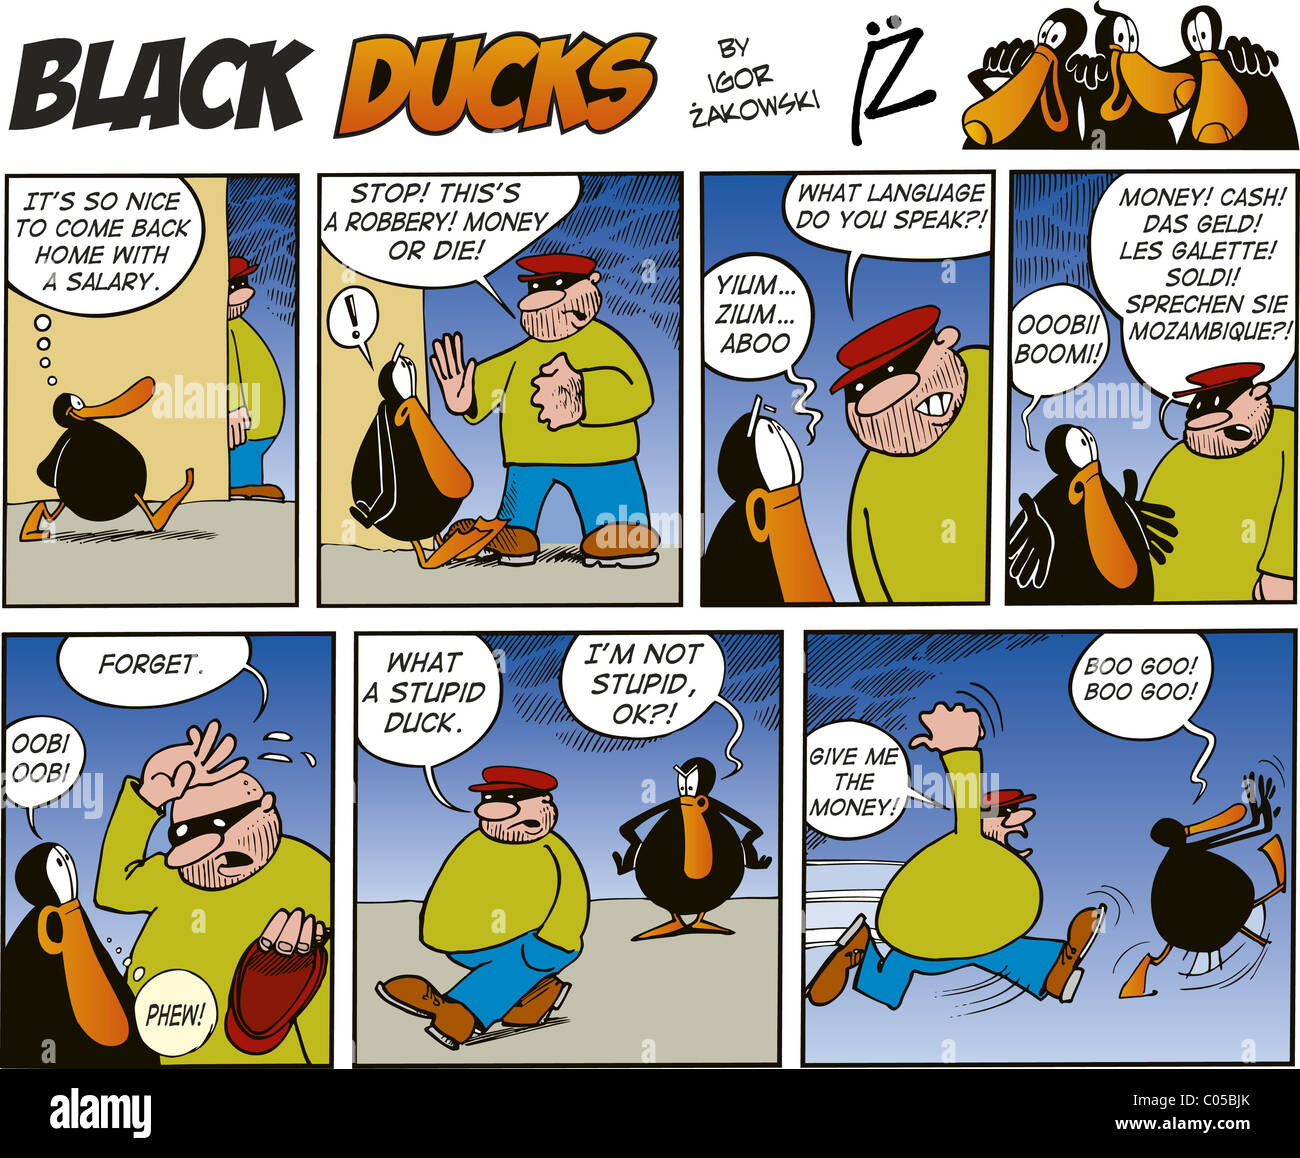 Black Ducks Comic Strip episode 46 Stock Photo